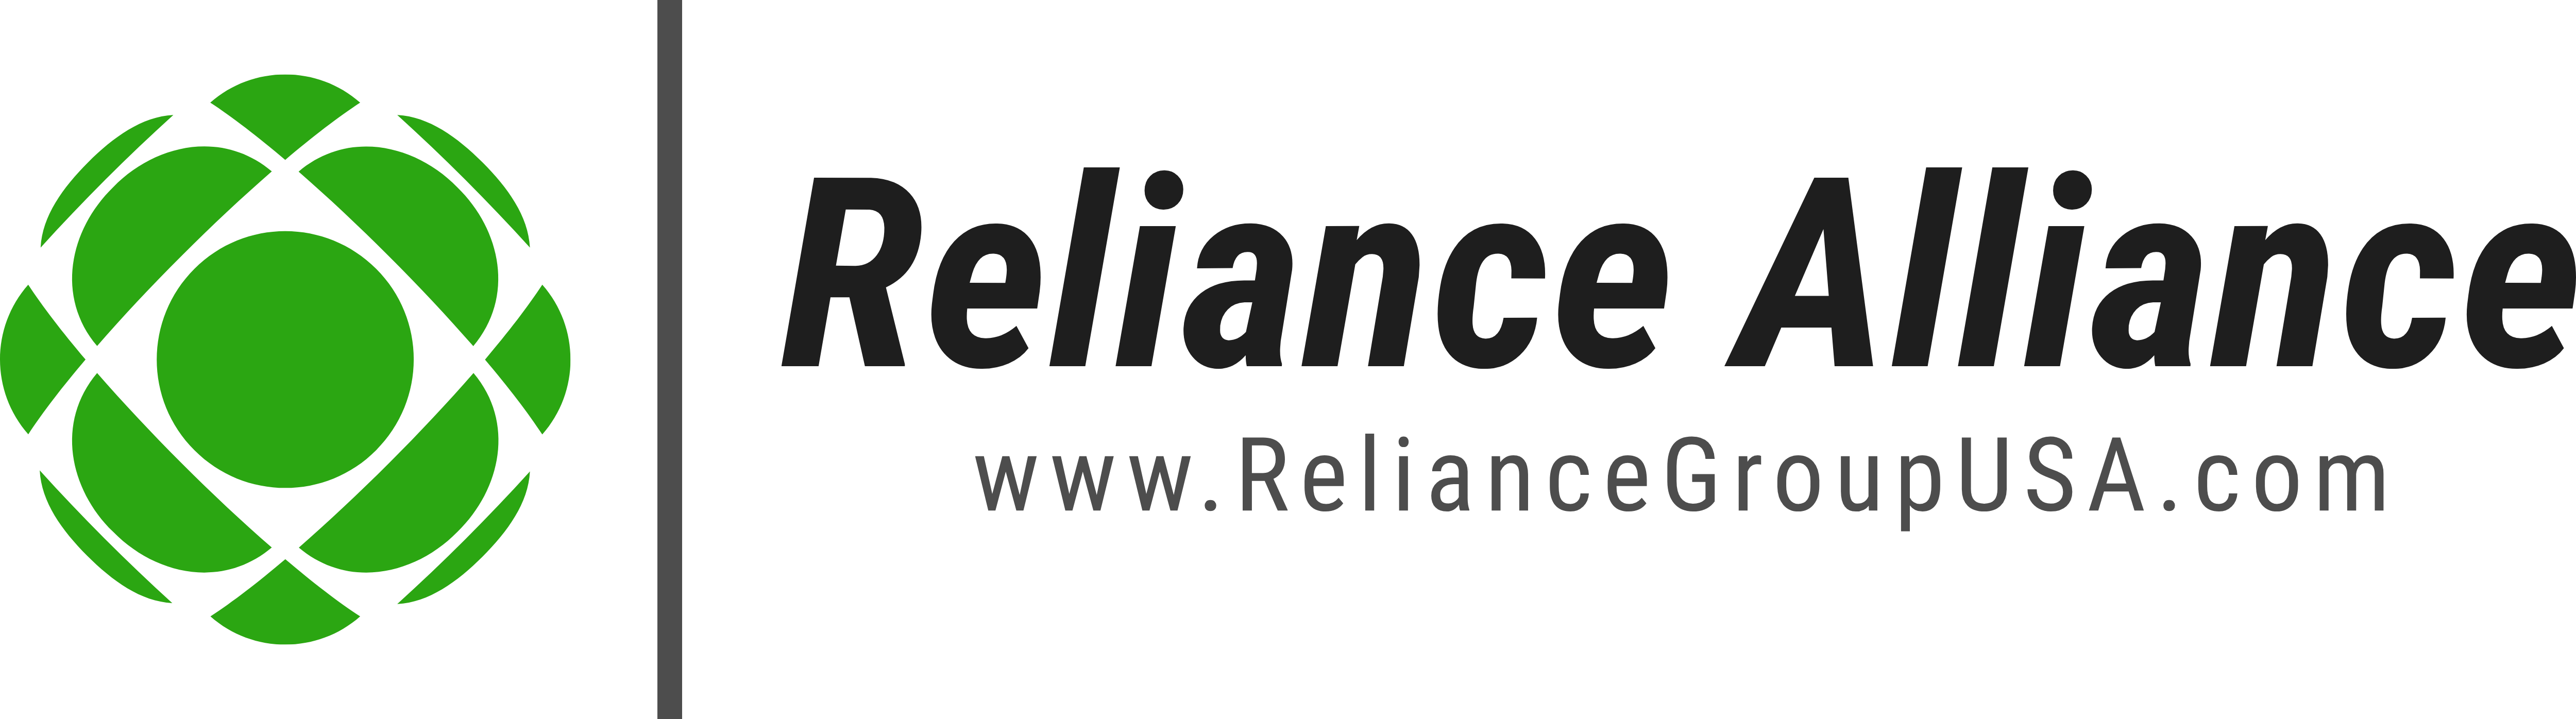 The Reliance Alliance Corporate Logo